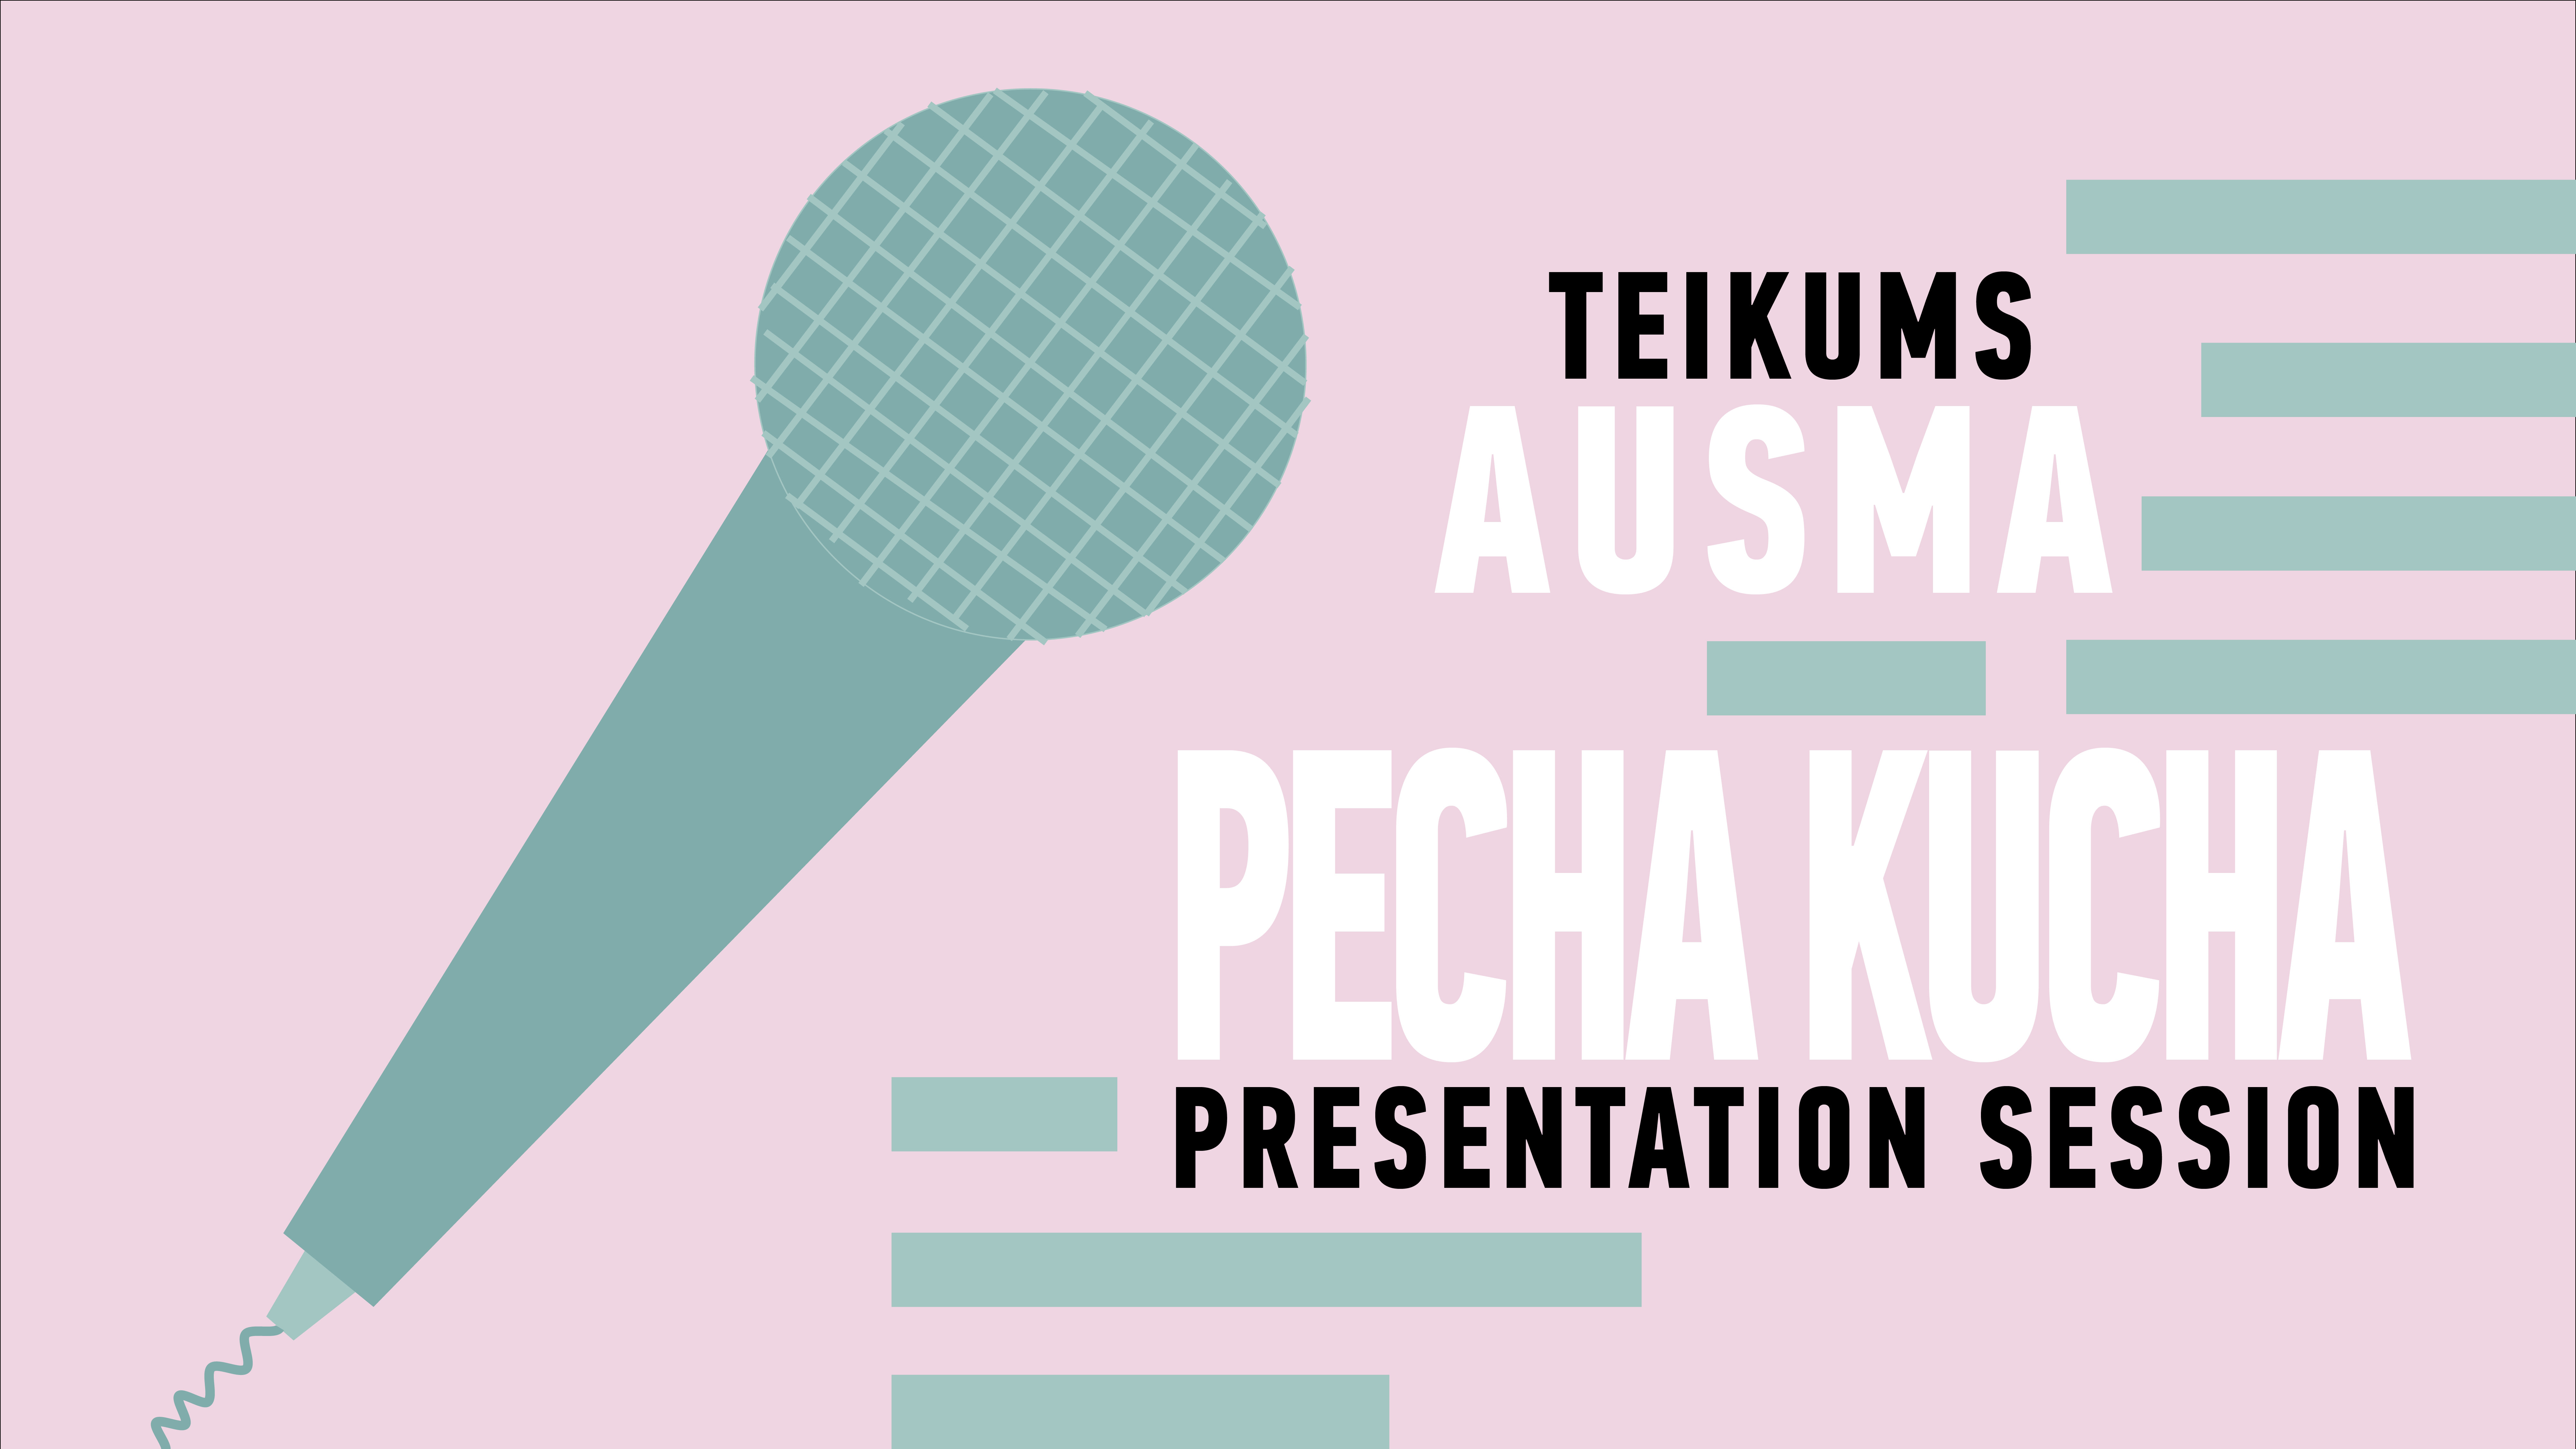 PechaKucha presentation session @Teikums Ausma